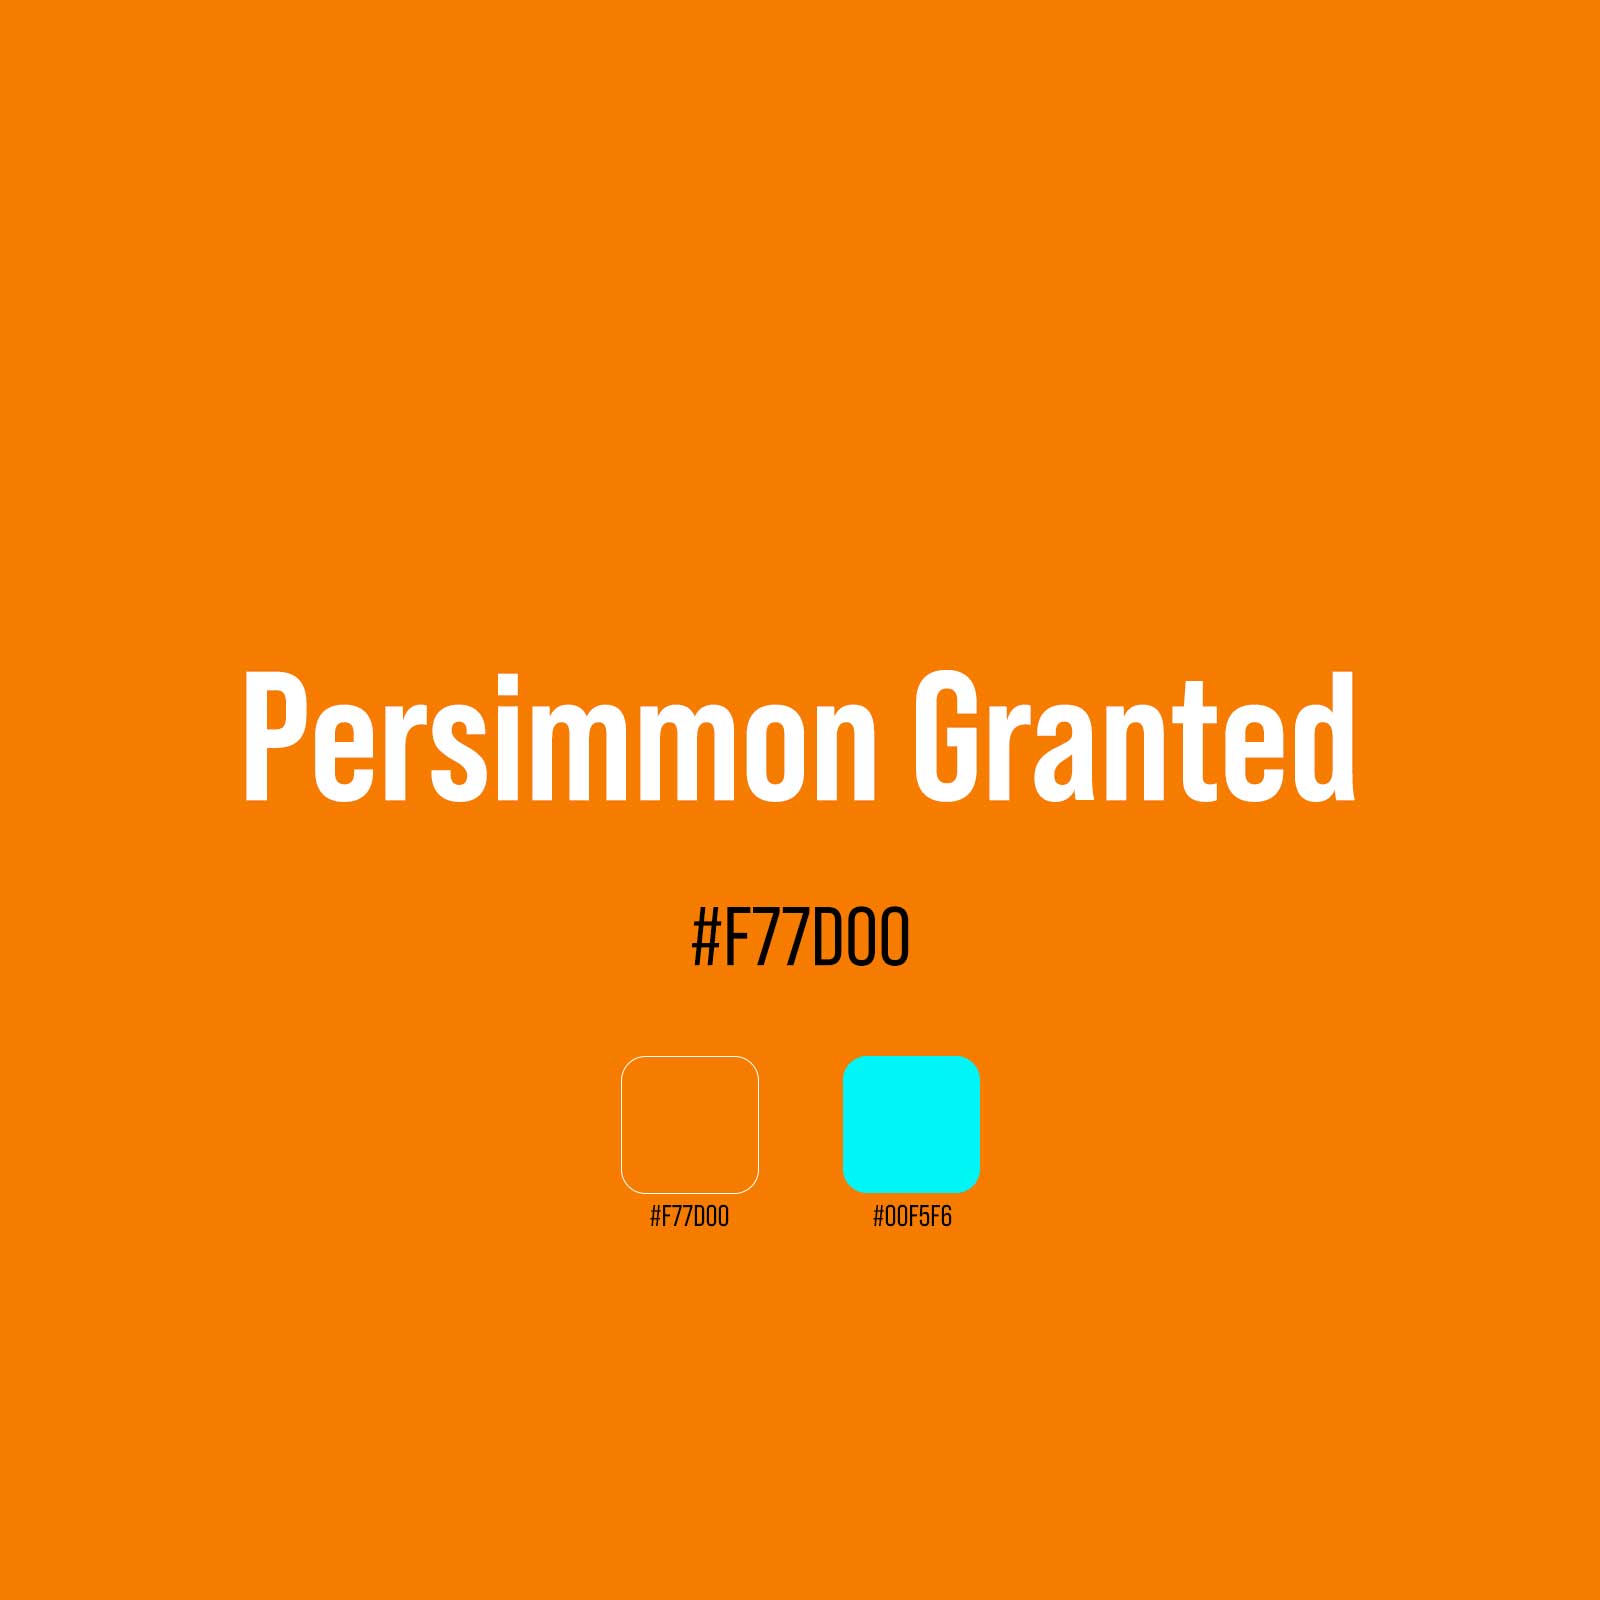 Persimmon Granted